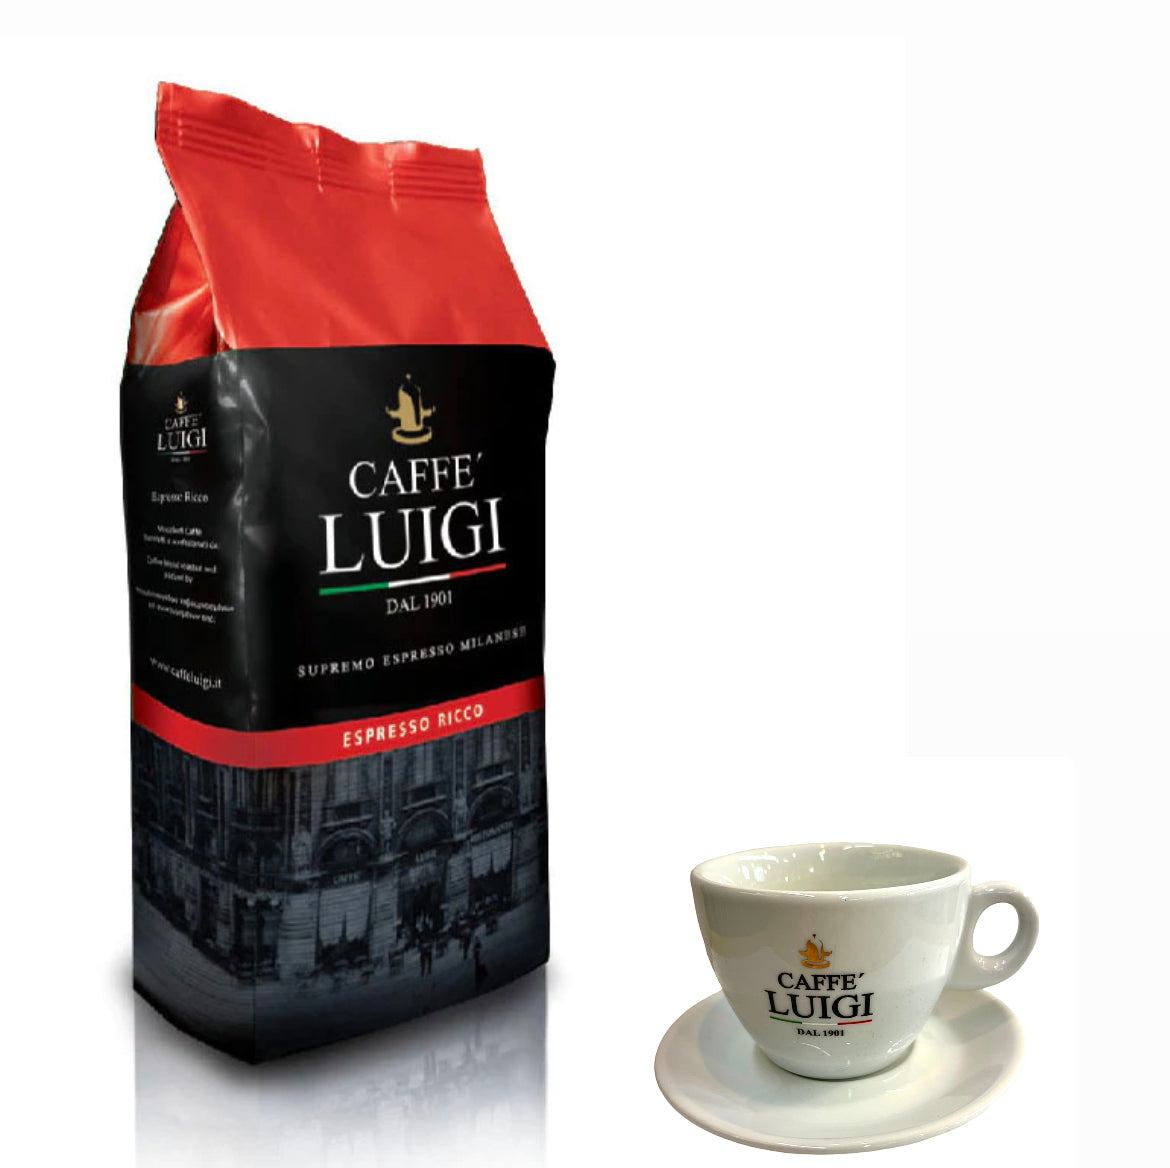 Espresso RICCO Bohnen 1Kg Caffe 'Luigi Ganze Espresso Bohnen Arabica - Robusta + 1 Cappuccino Tasse Klein